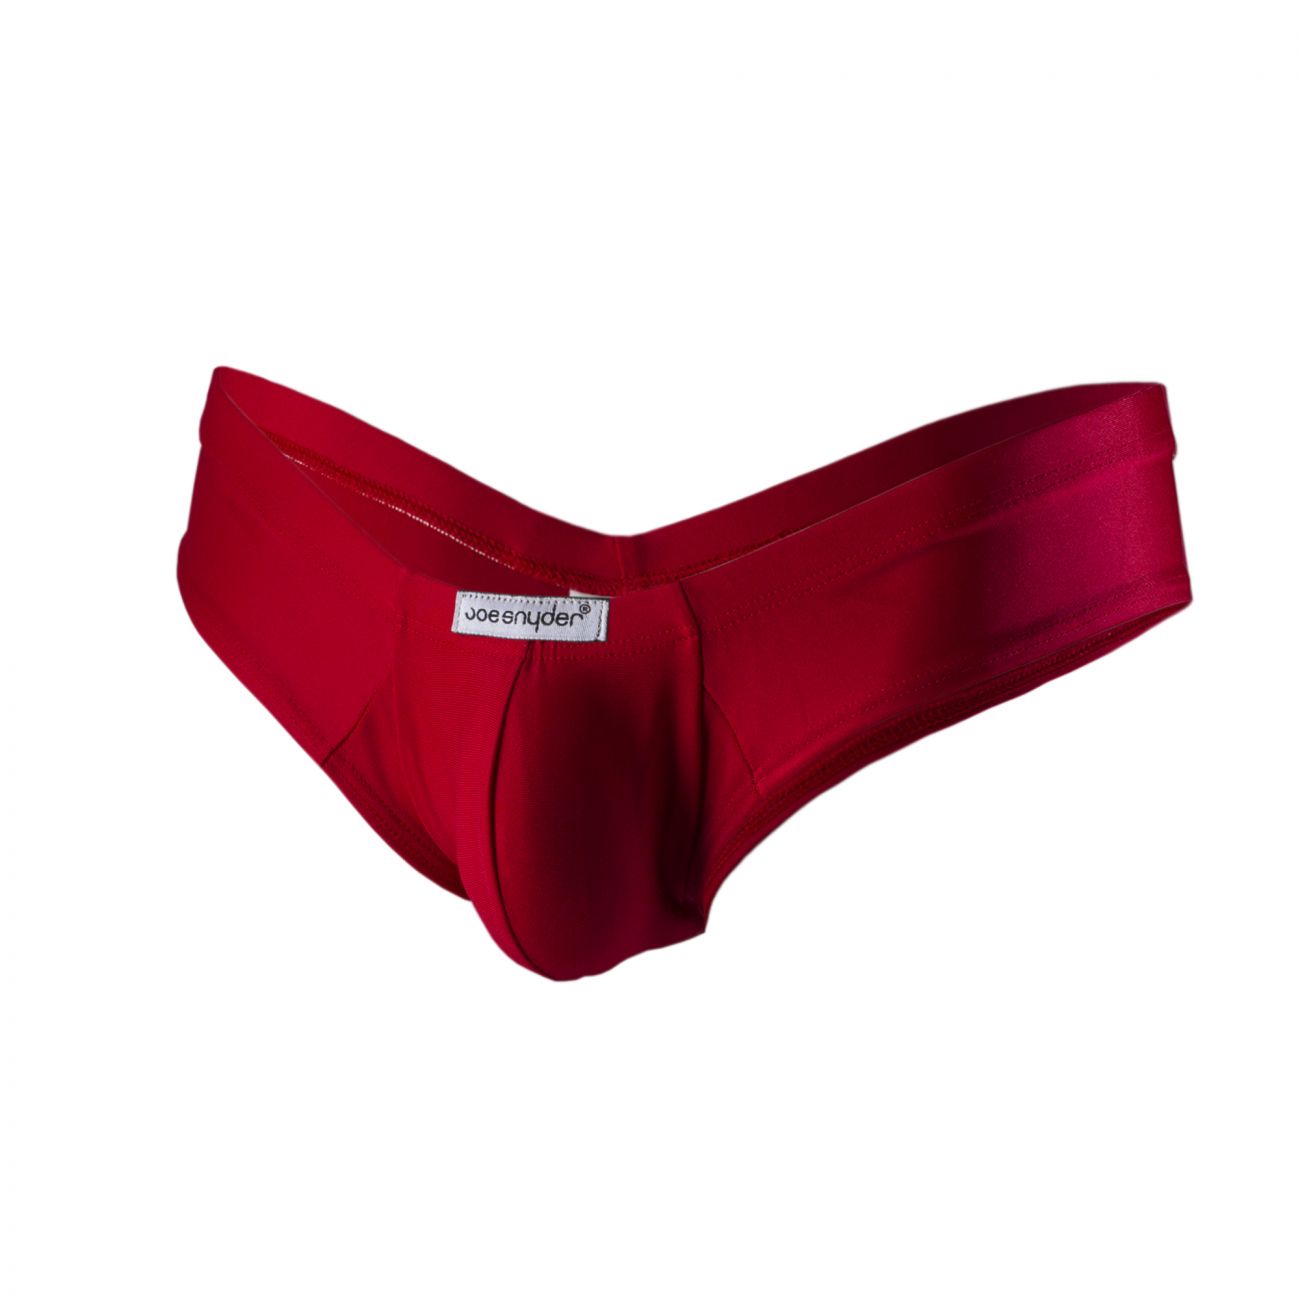 Mens Underwear: Joe Snyder JS22-Pol Polyester Mini Cheek | eBay